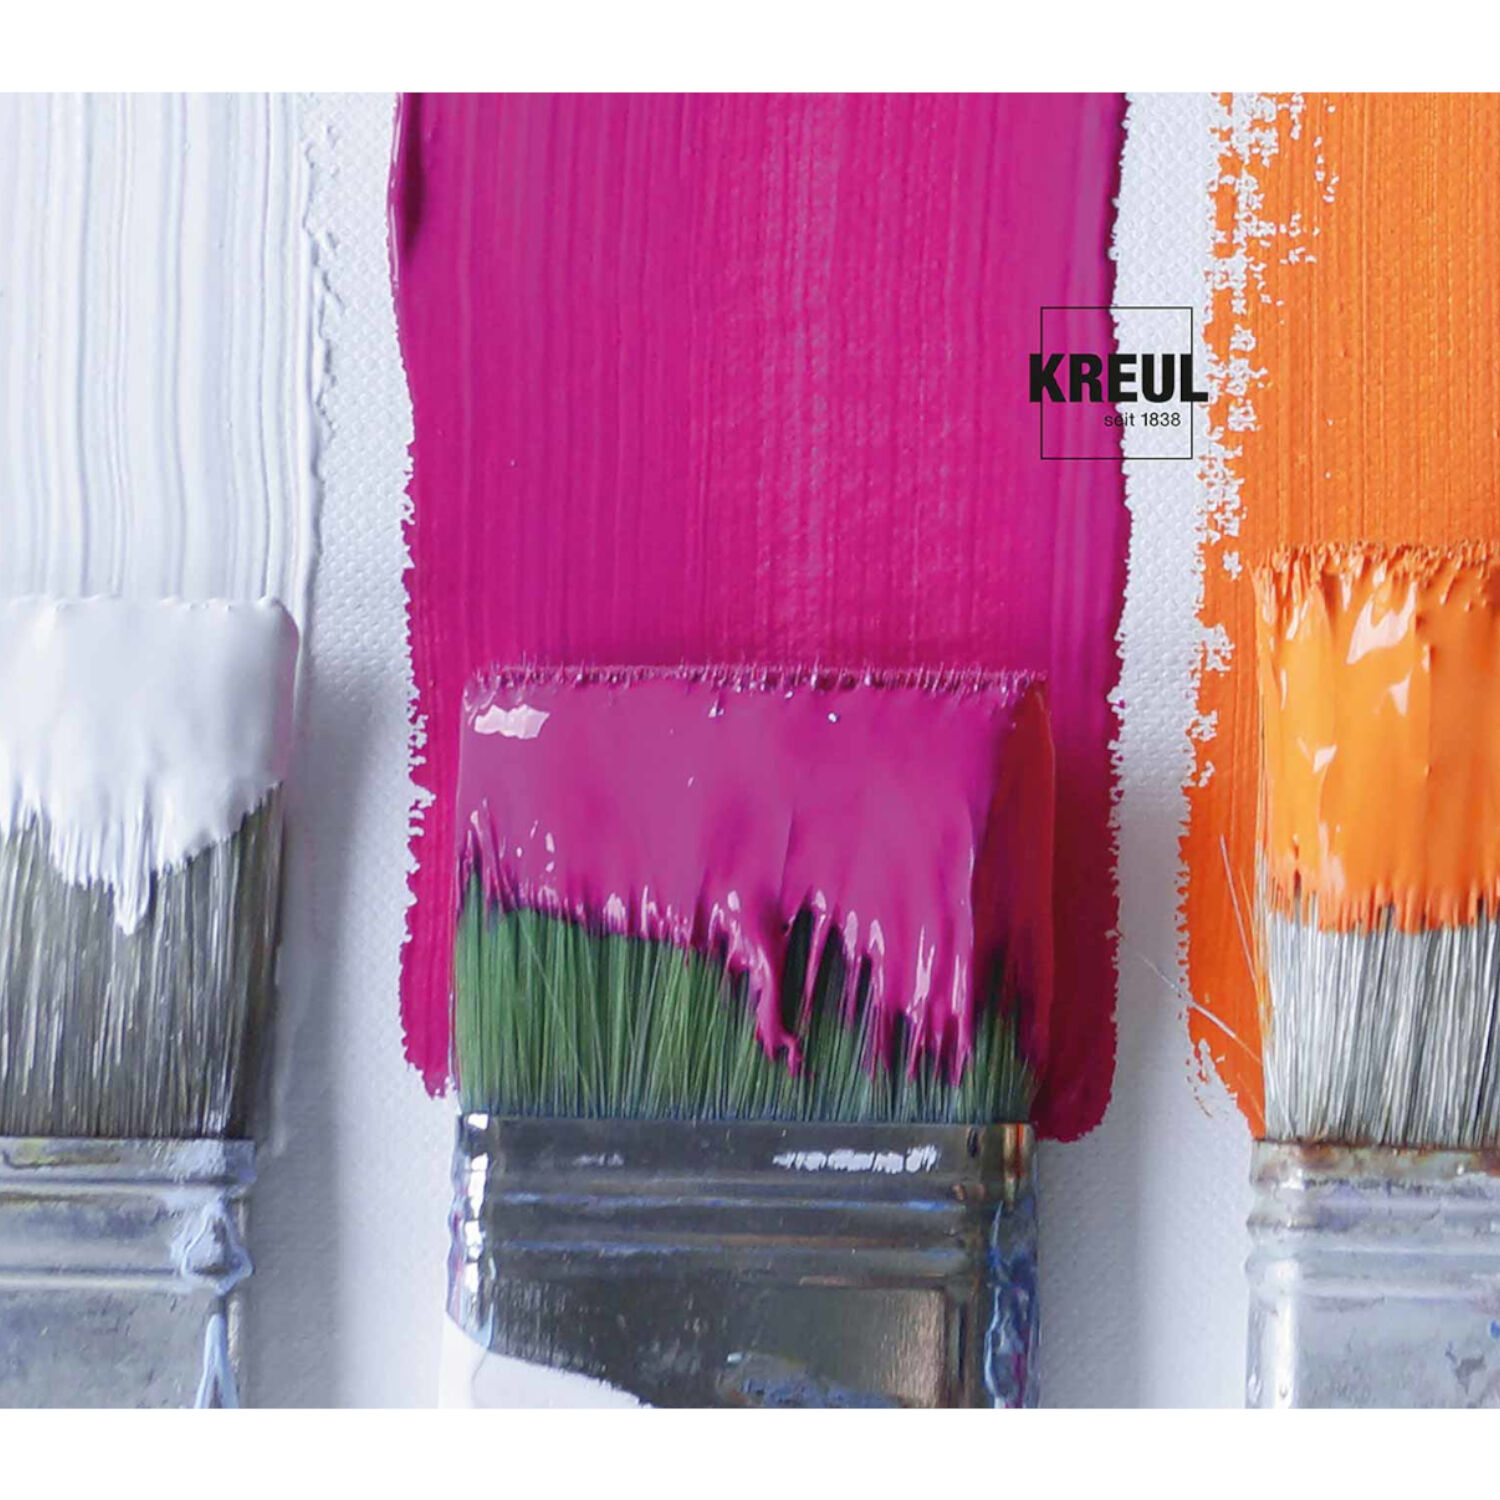 Kreul Solo Goya Acrylic Acrylfarbe, 100 ml, Lichter Ocker Bild 3